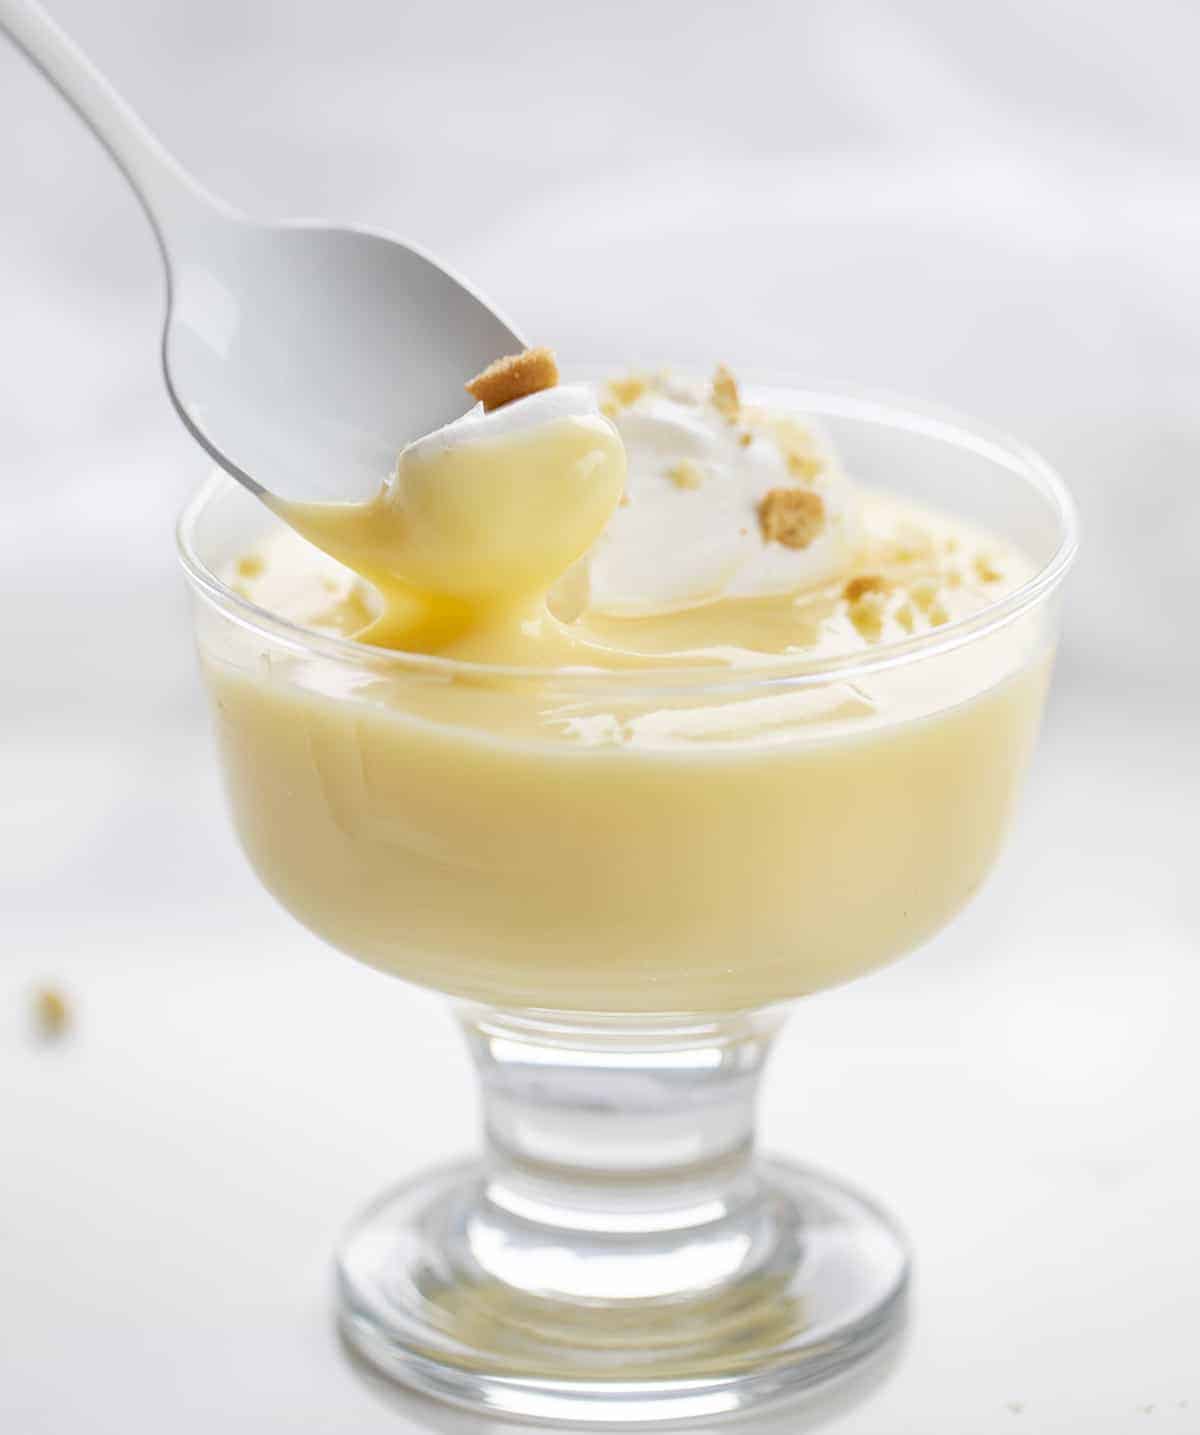 Spoon Taking a Bite of Vanilla Pudding